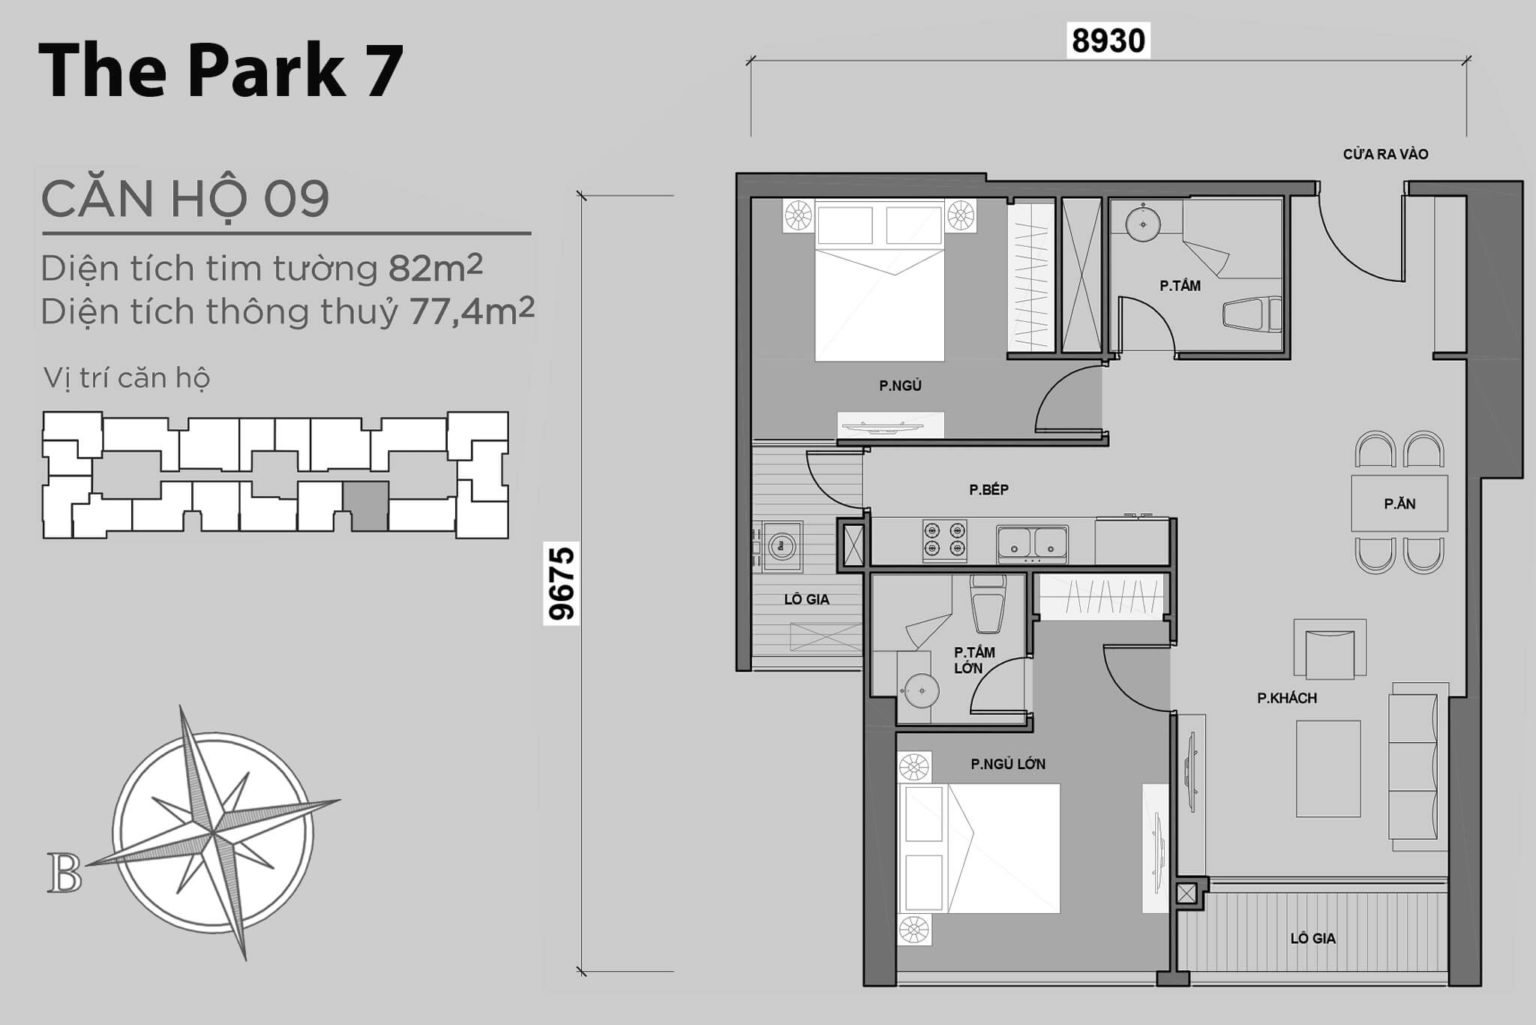 202301/02/10/071331-mat-bang-layout-park-7-p7-09-1536x1025.jpg